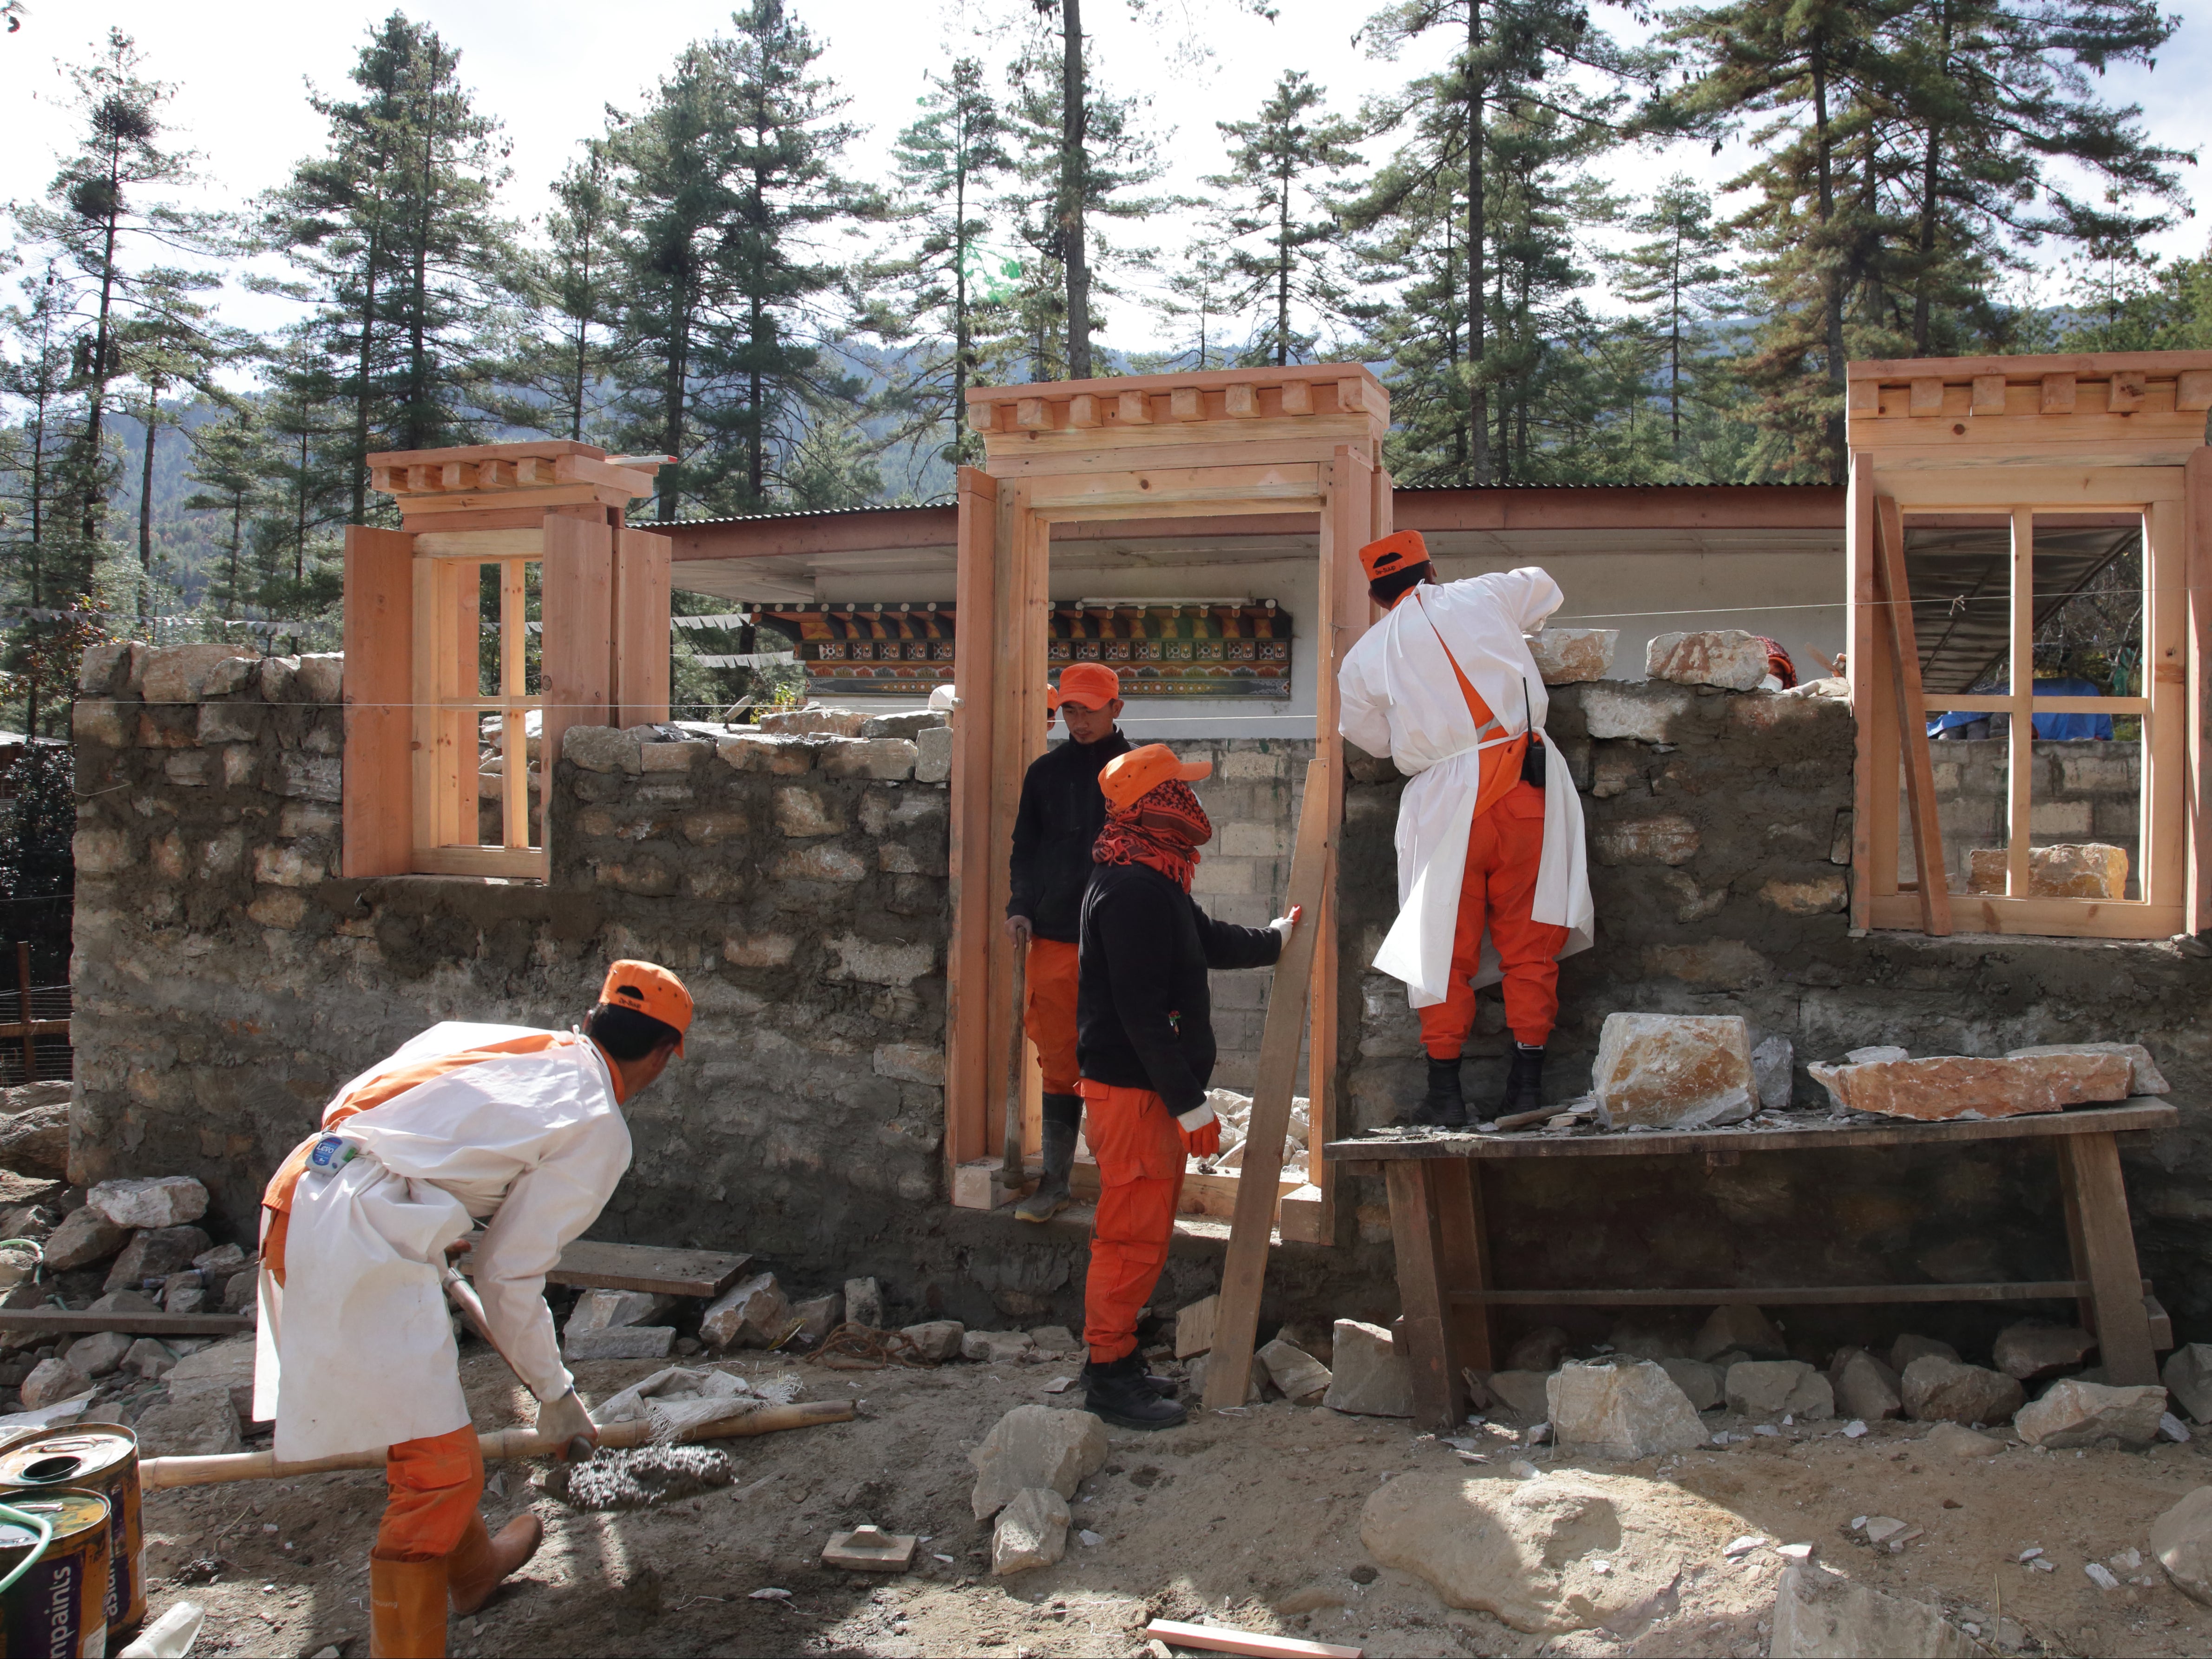 Bhutanese volunteers, always in orange, helping on a building project